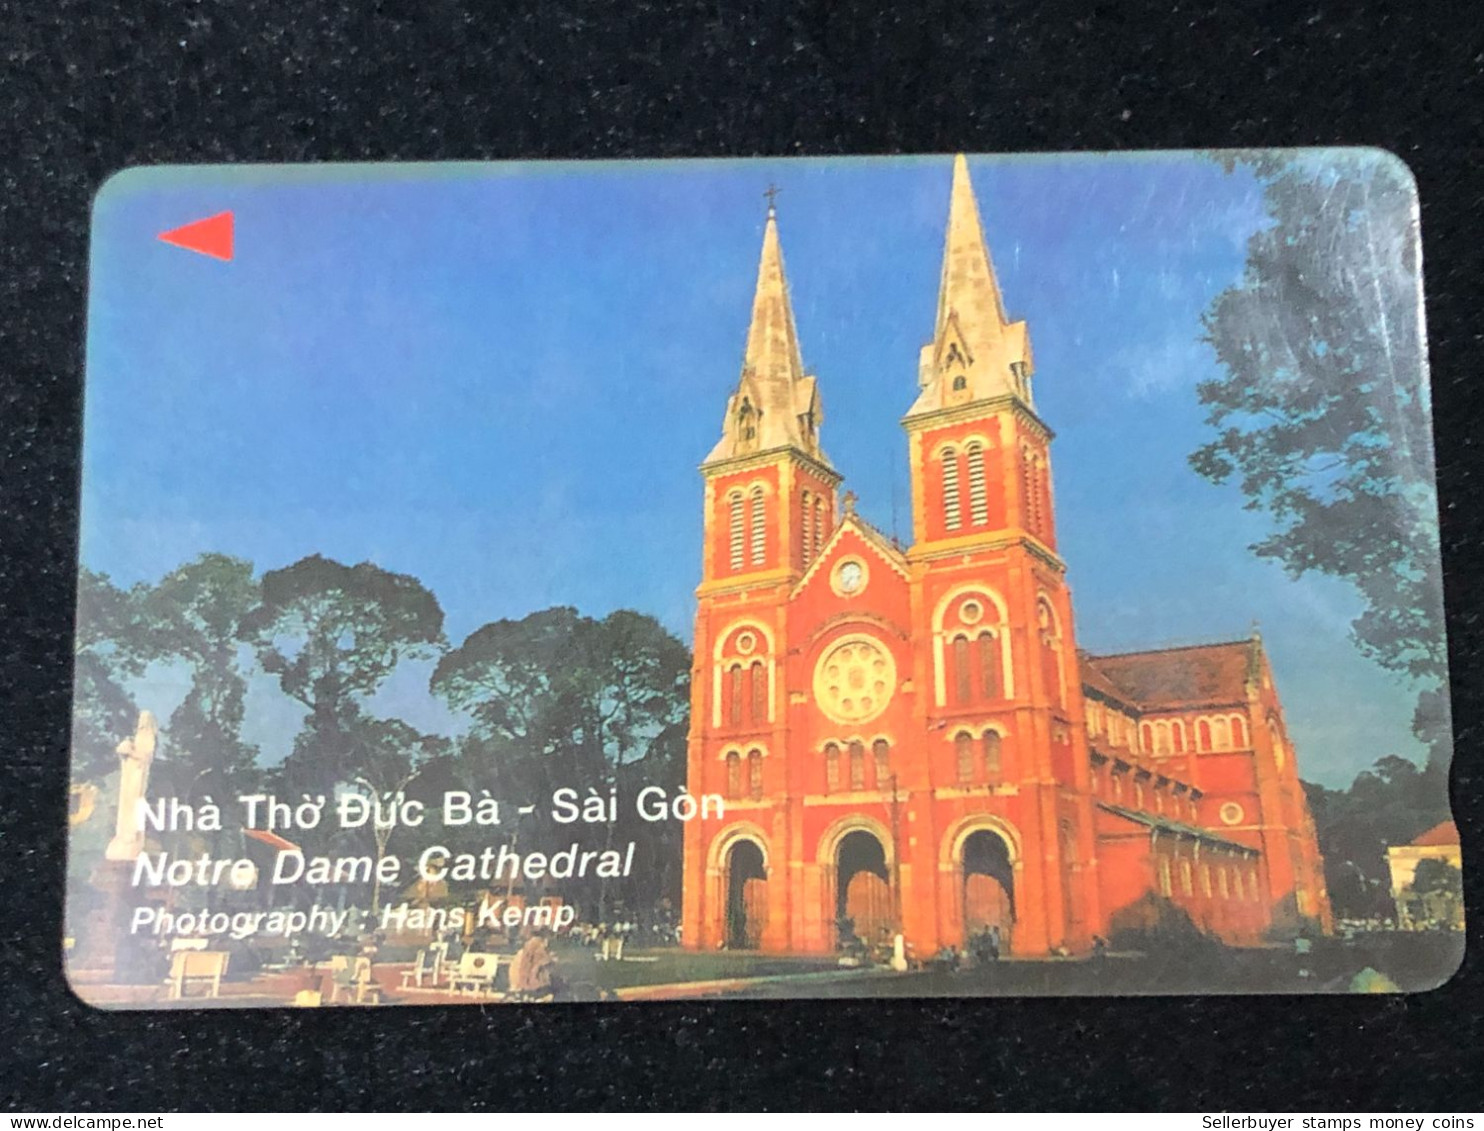 Card Phonekad Vietnam(NOTRE DAME CATHEDRAL 60 000dong-1996)-1pcs - Viêt-Nam